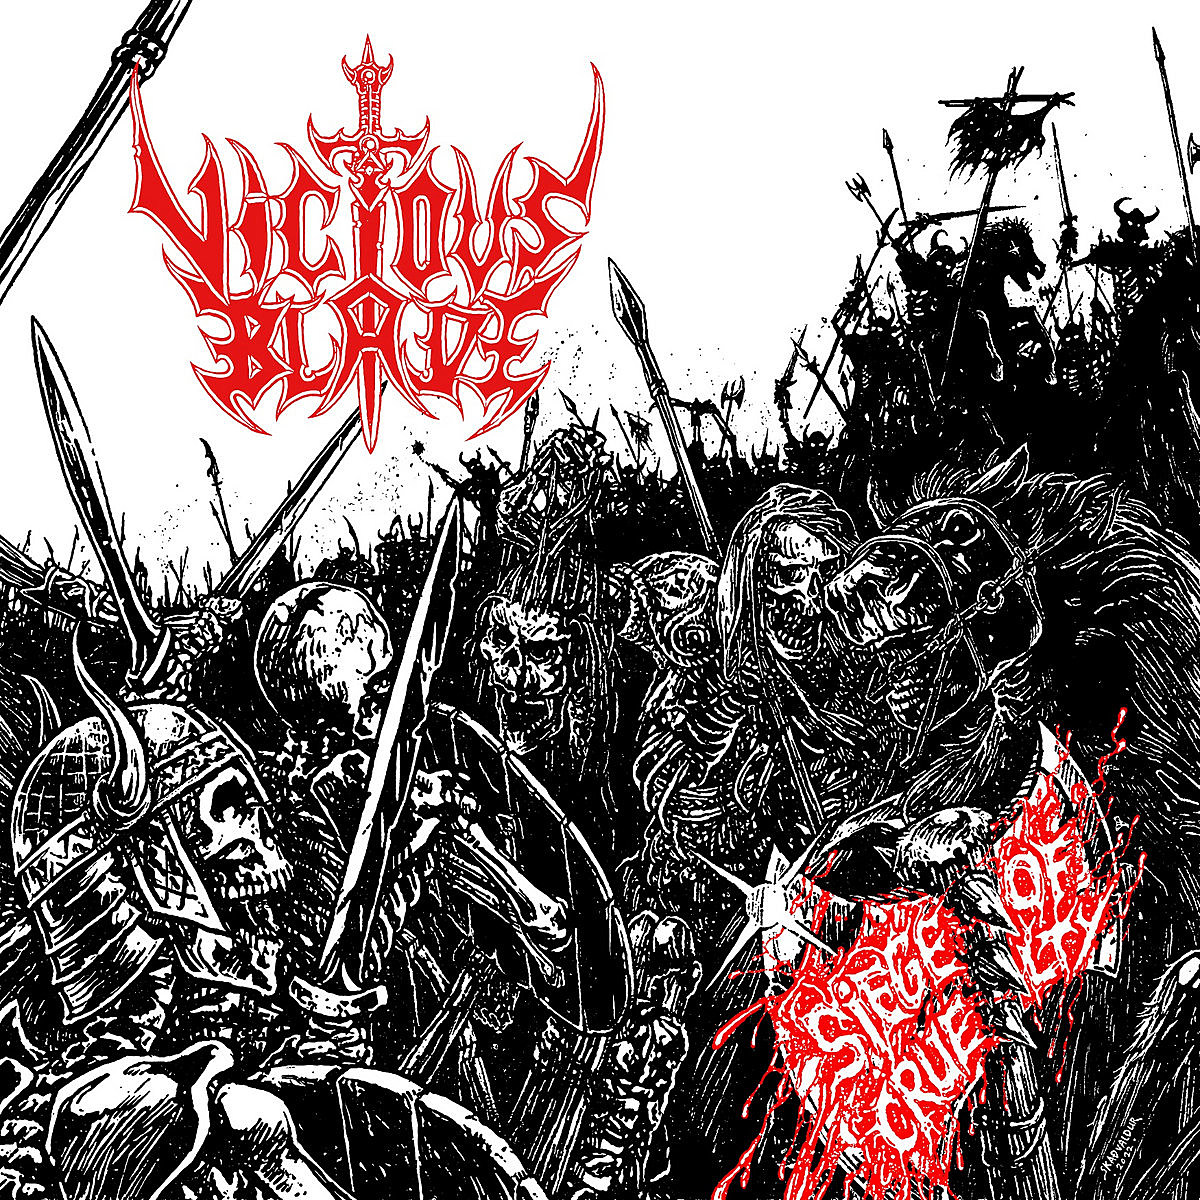 Vicious Blade Siege of Cruelty